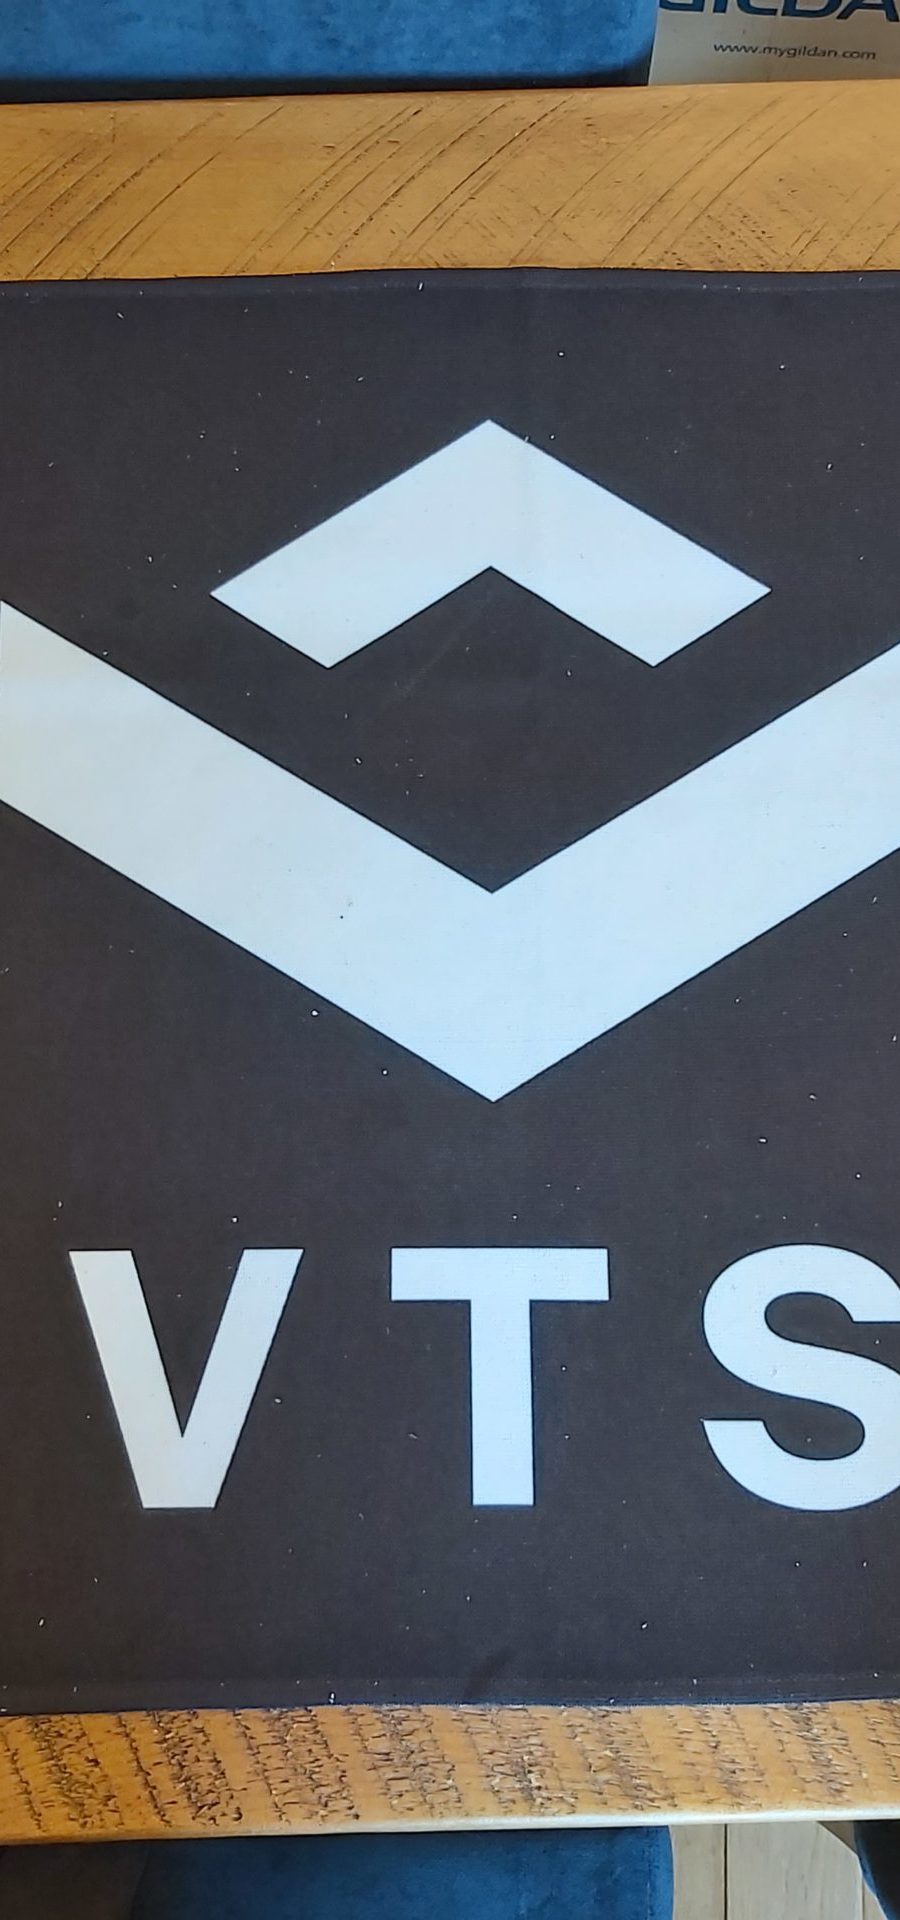 Corporate branded towel for VTSs